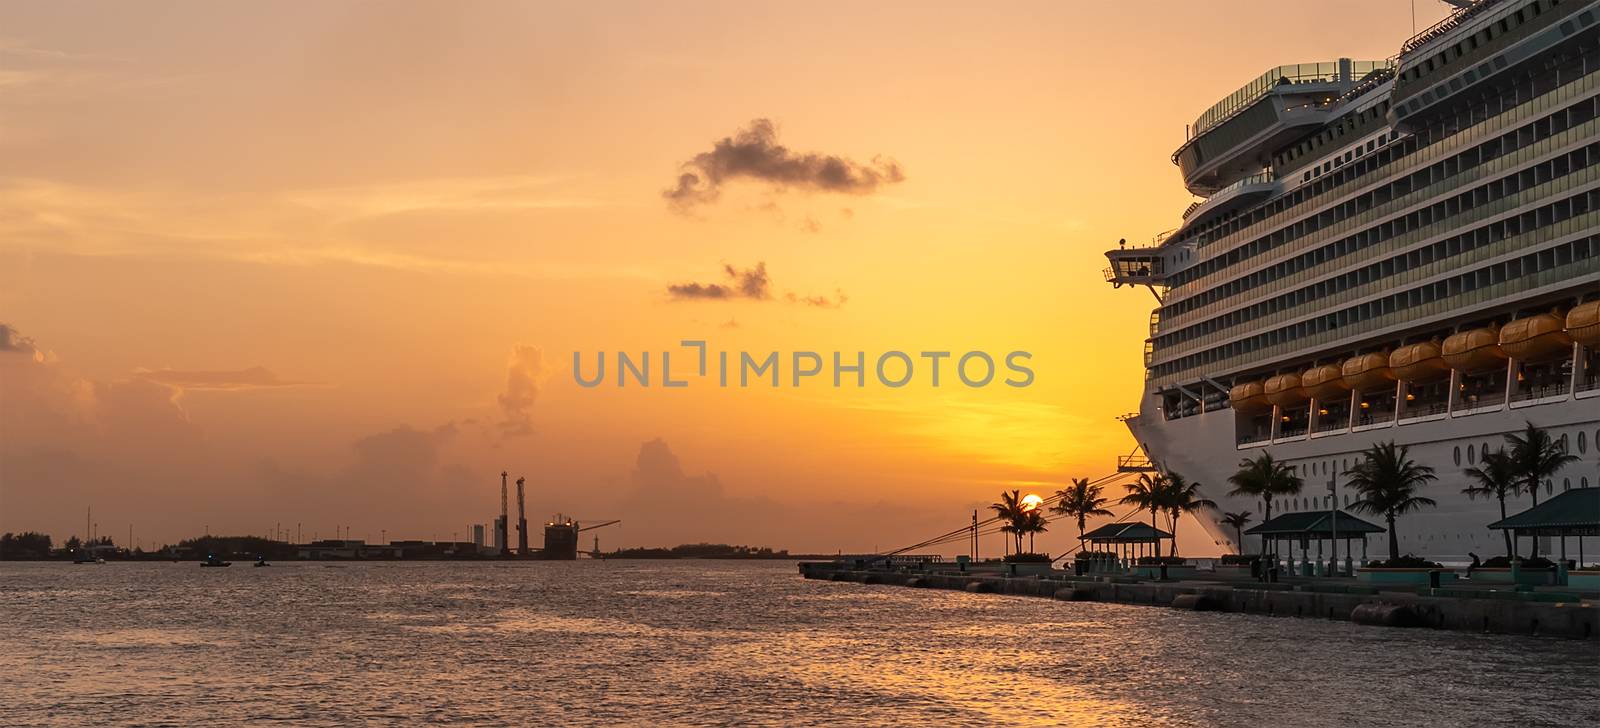 Luxurious cruise liner at sunset docked in Nassau, Bahamas. Golden hour. Beautiful orange-and-yellow sunset. Cruising concept.